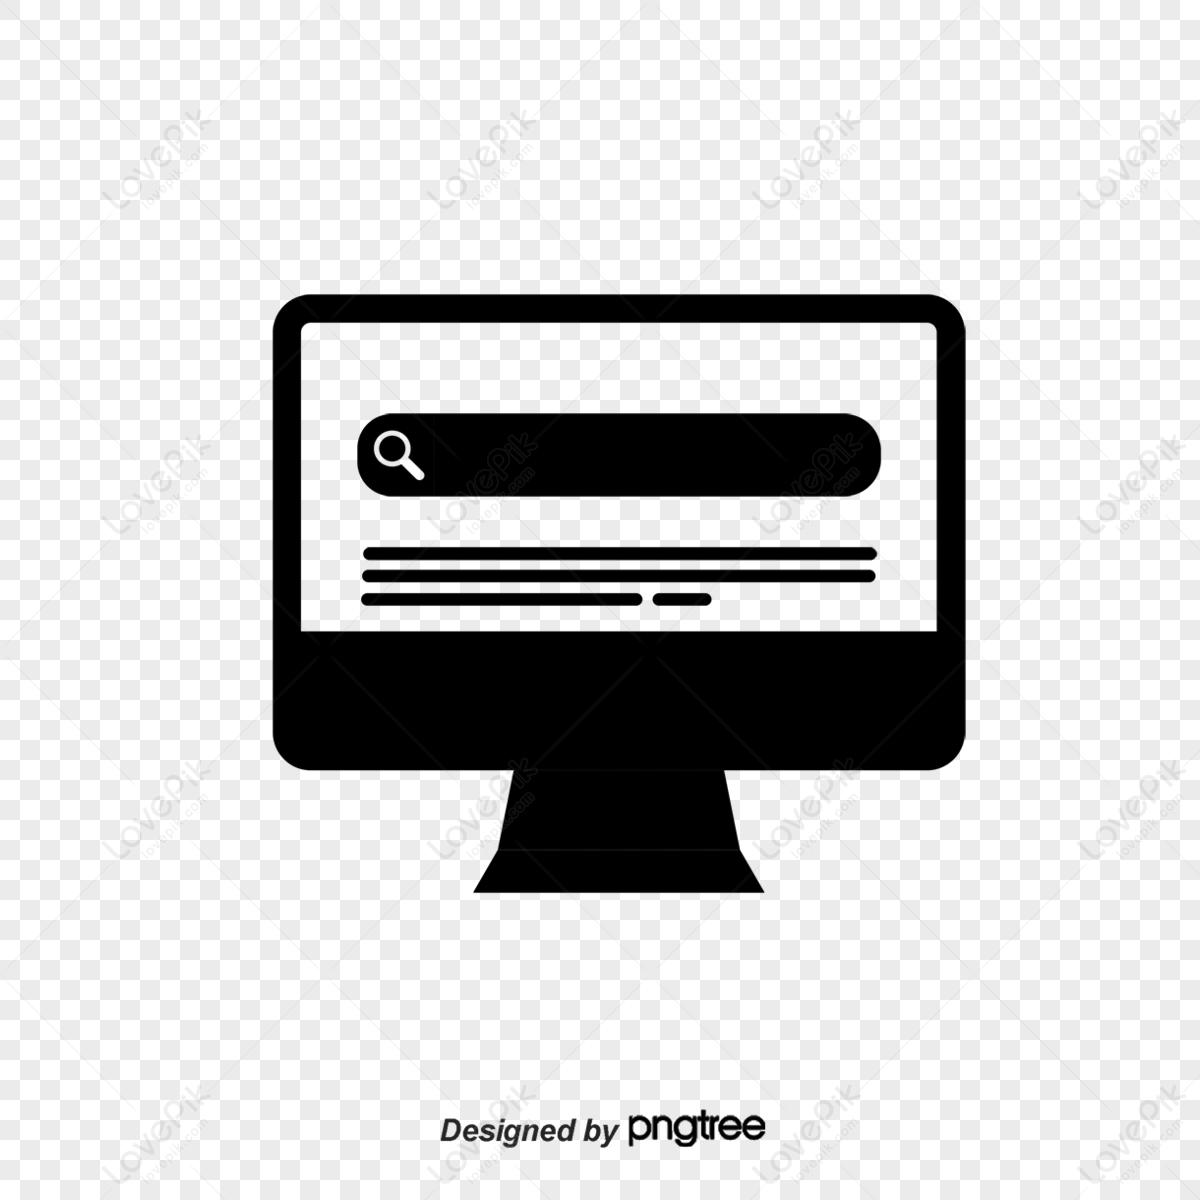 Digital Computer Logo PNG Transparent & SVG Vector - Freebie Supply